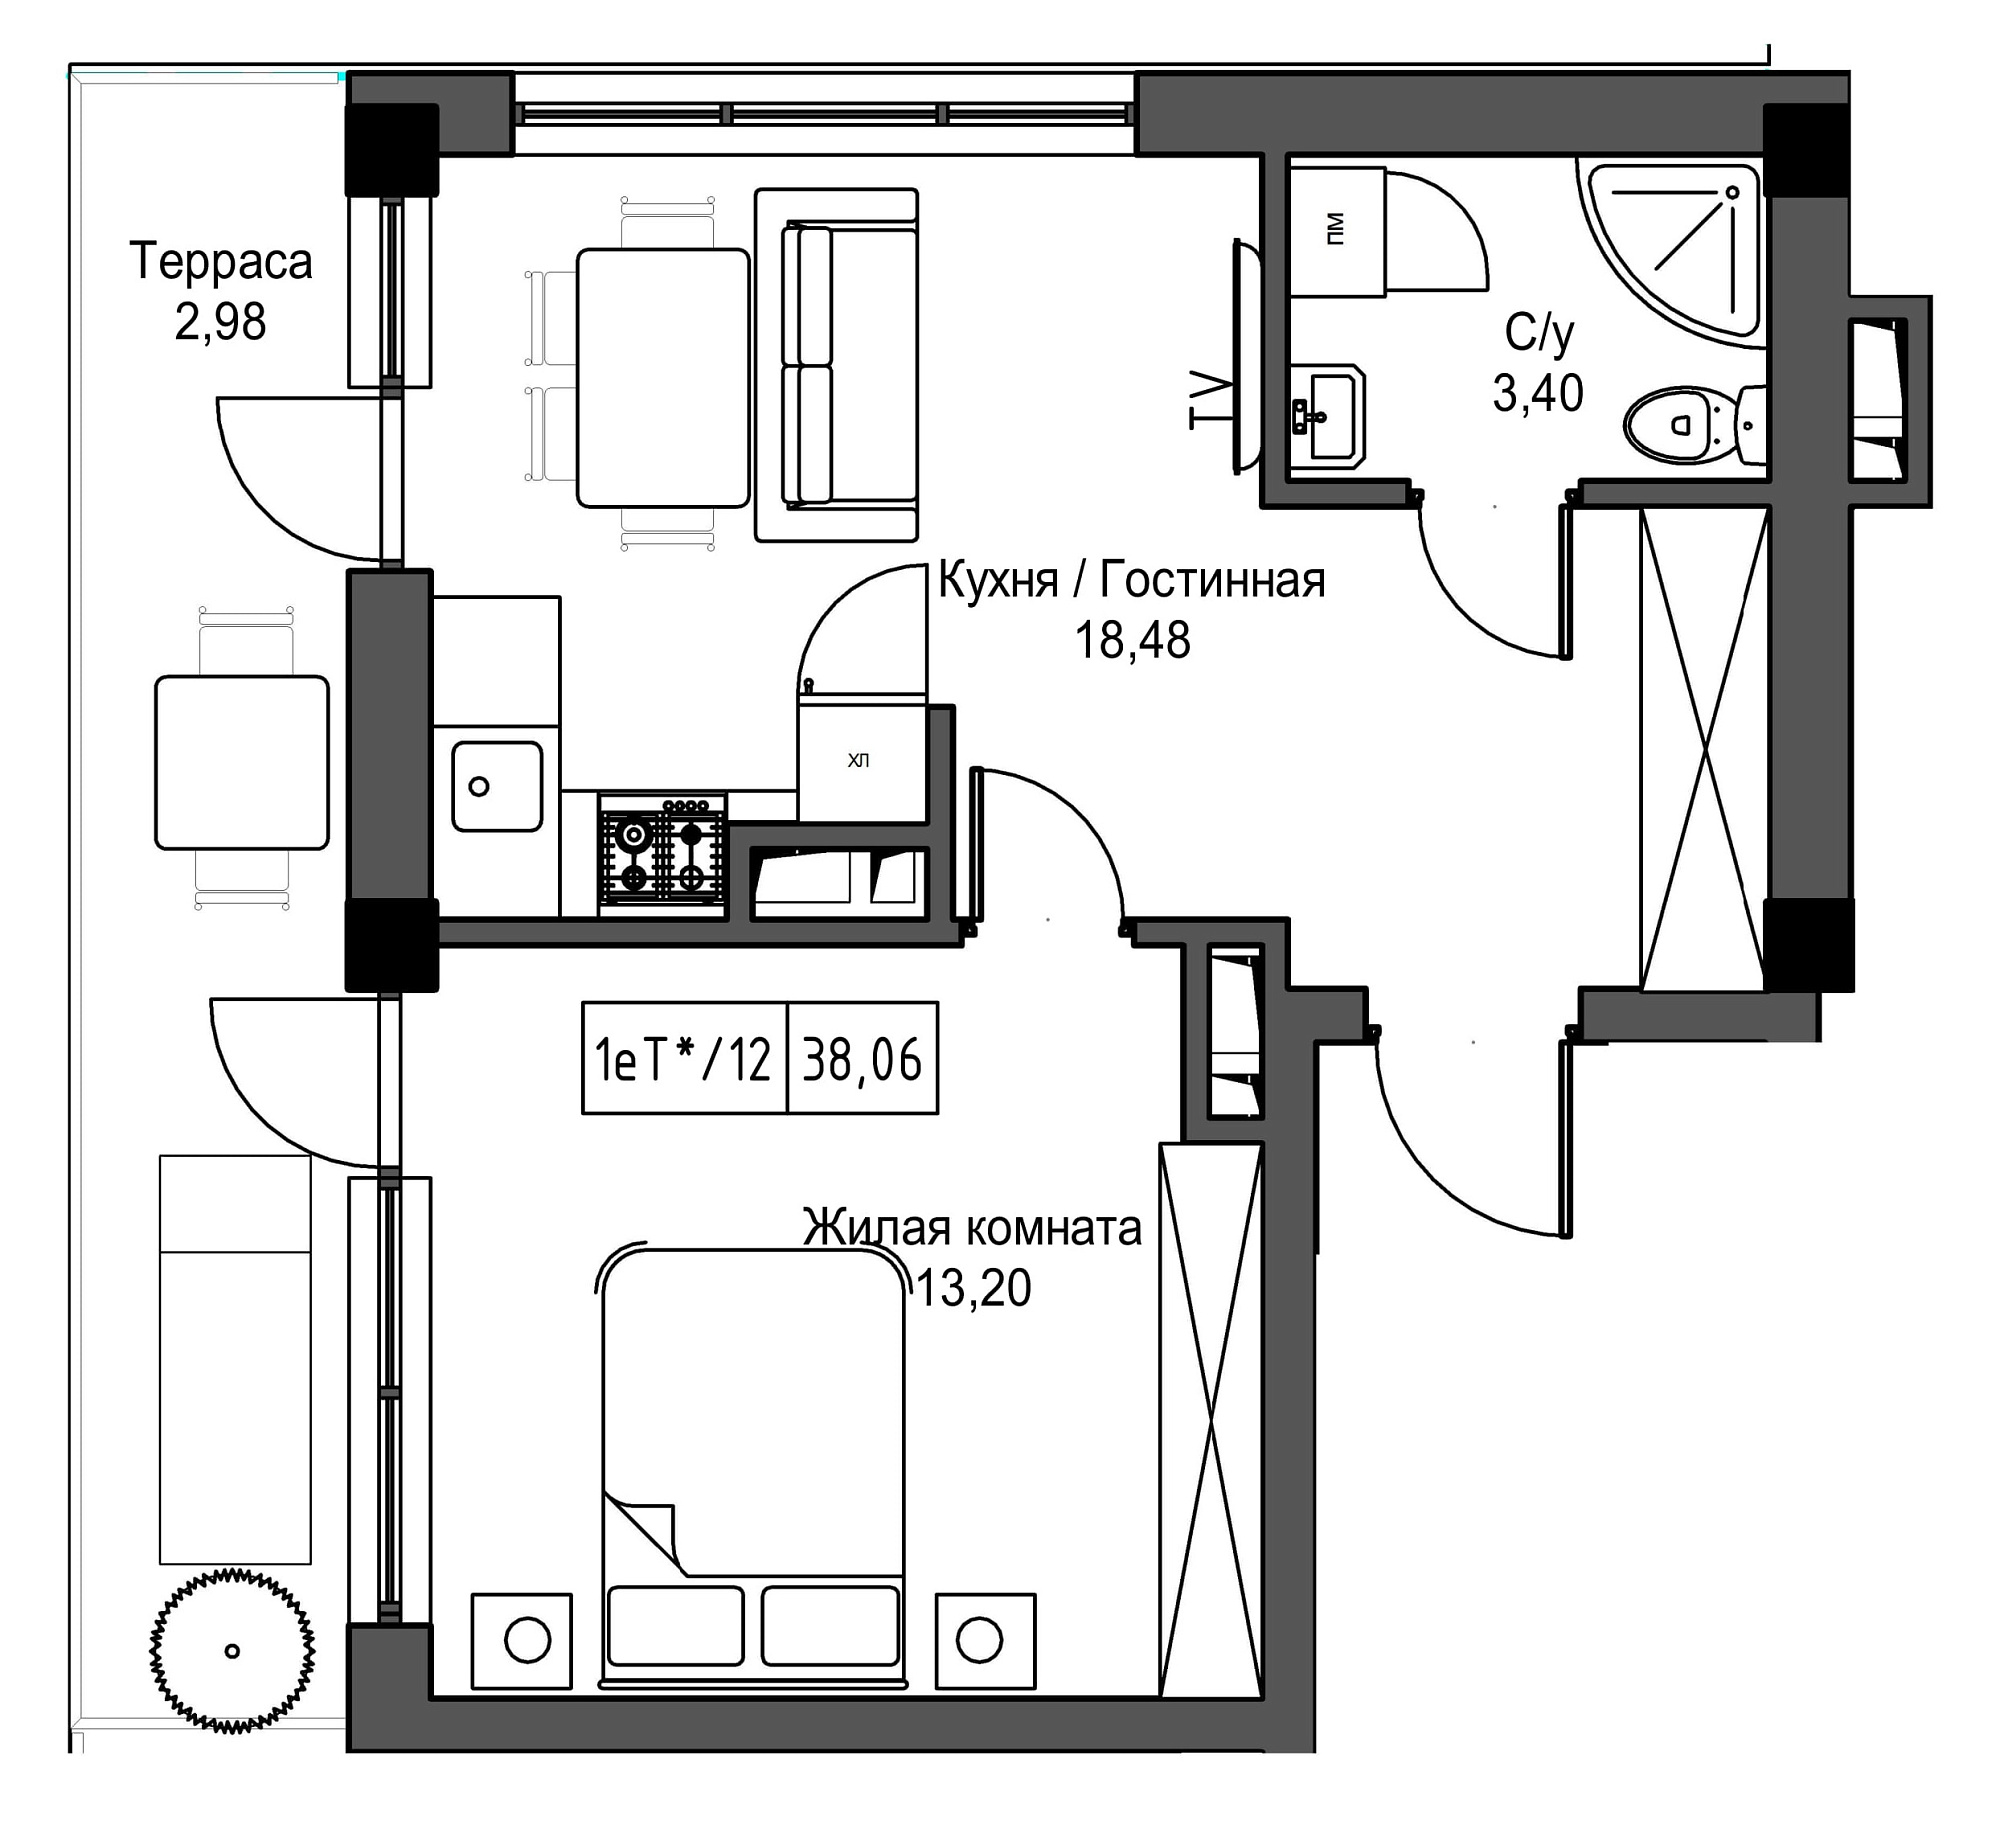 Планування 1-к квартира площею 38.06м2, UM-002-08/0081.